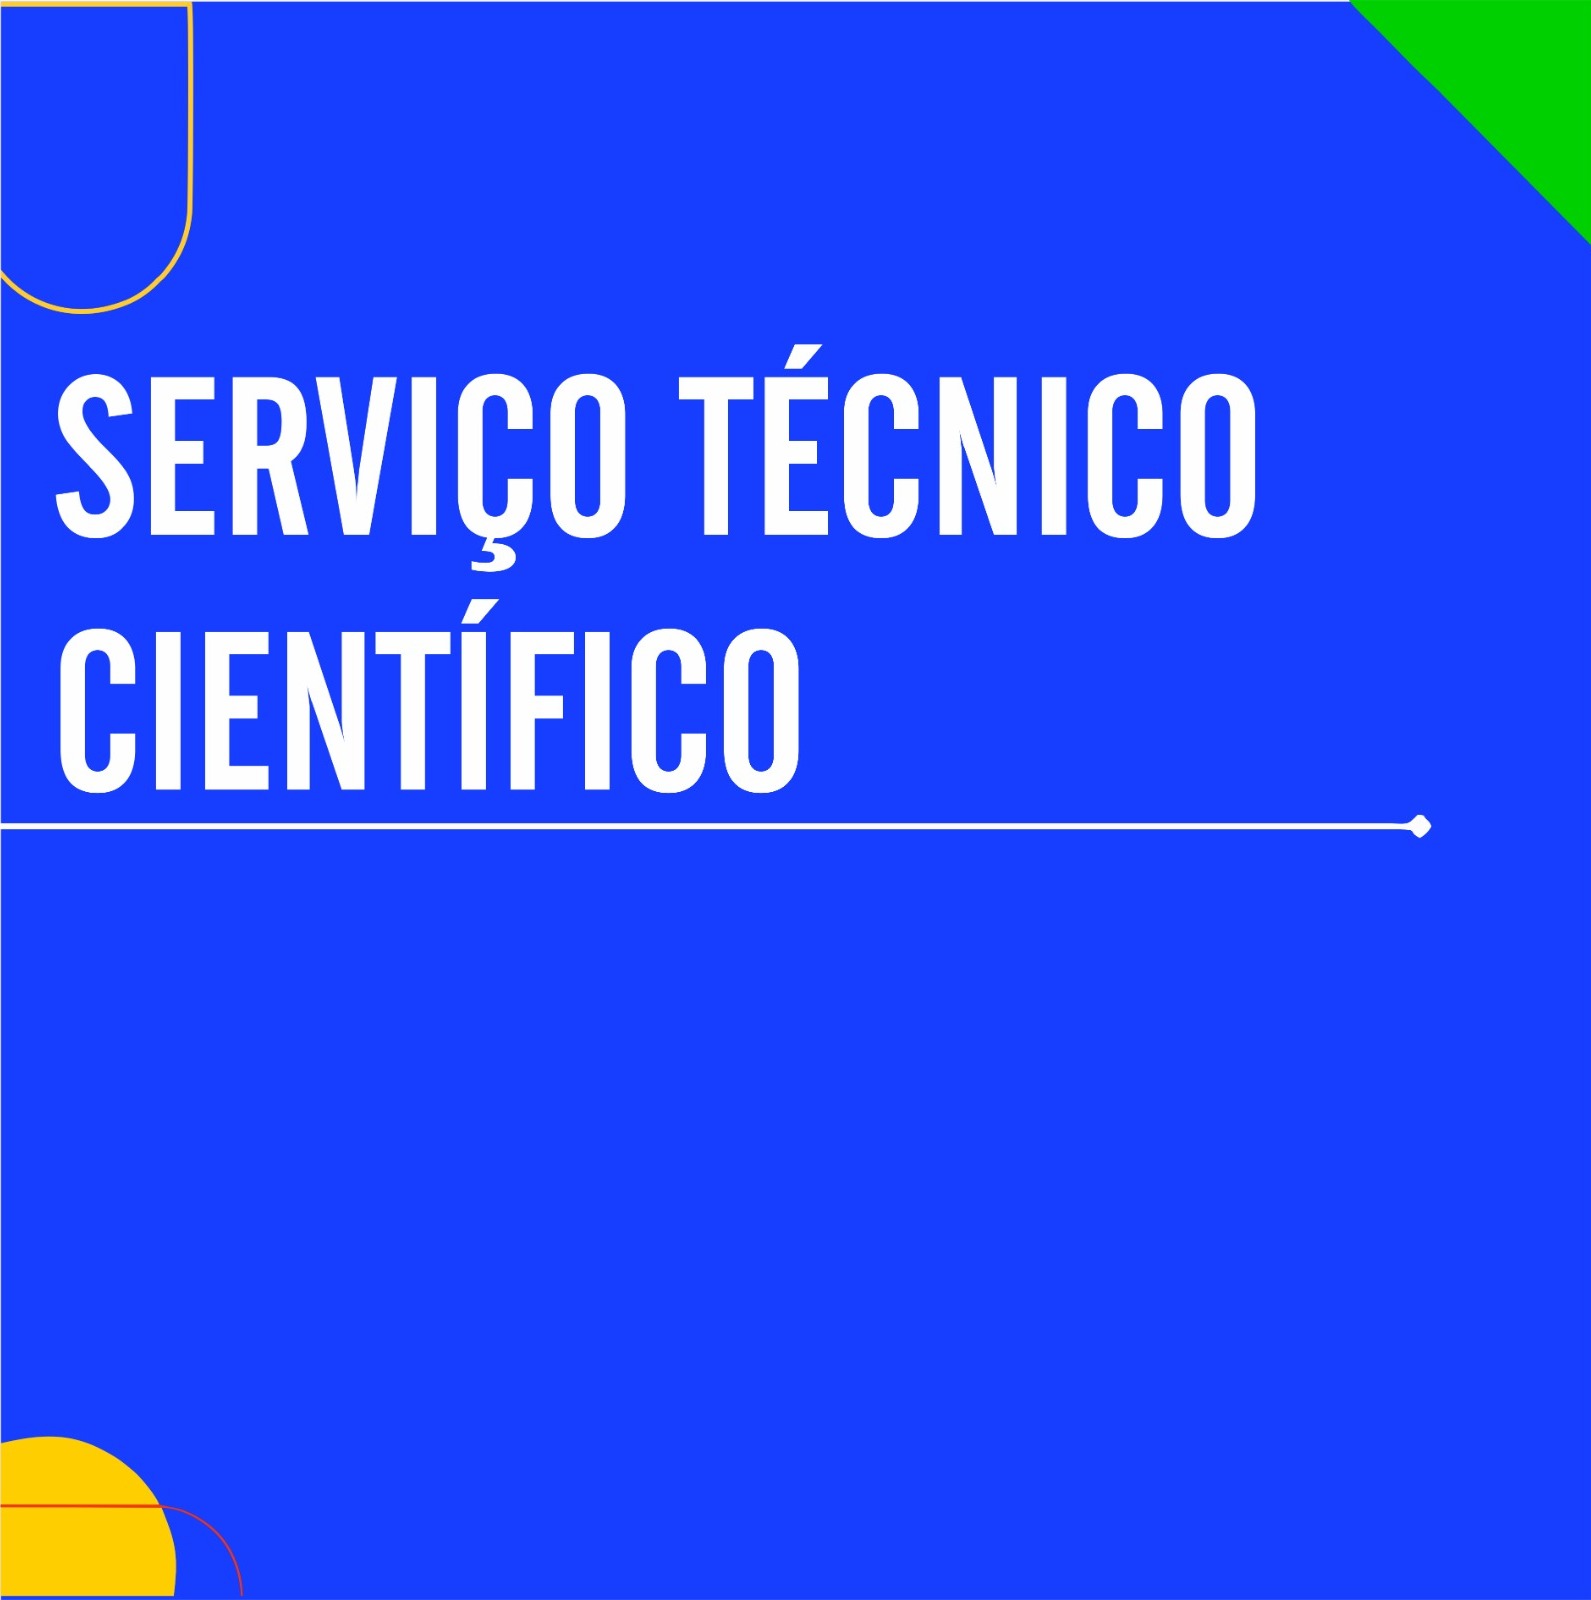 Serviço Técnico Científico - SETEC